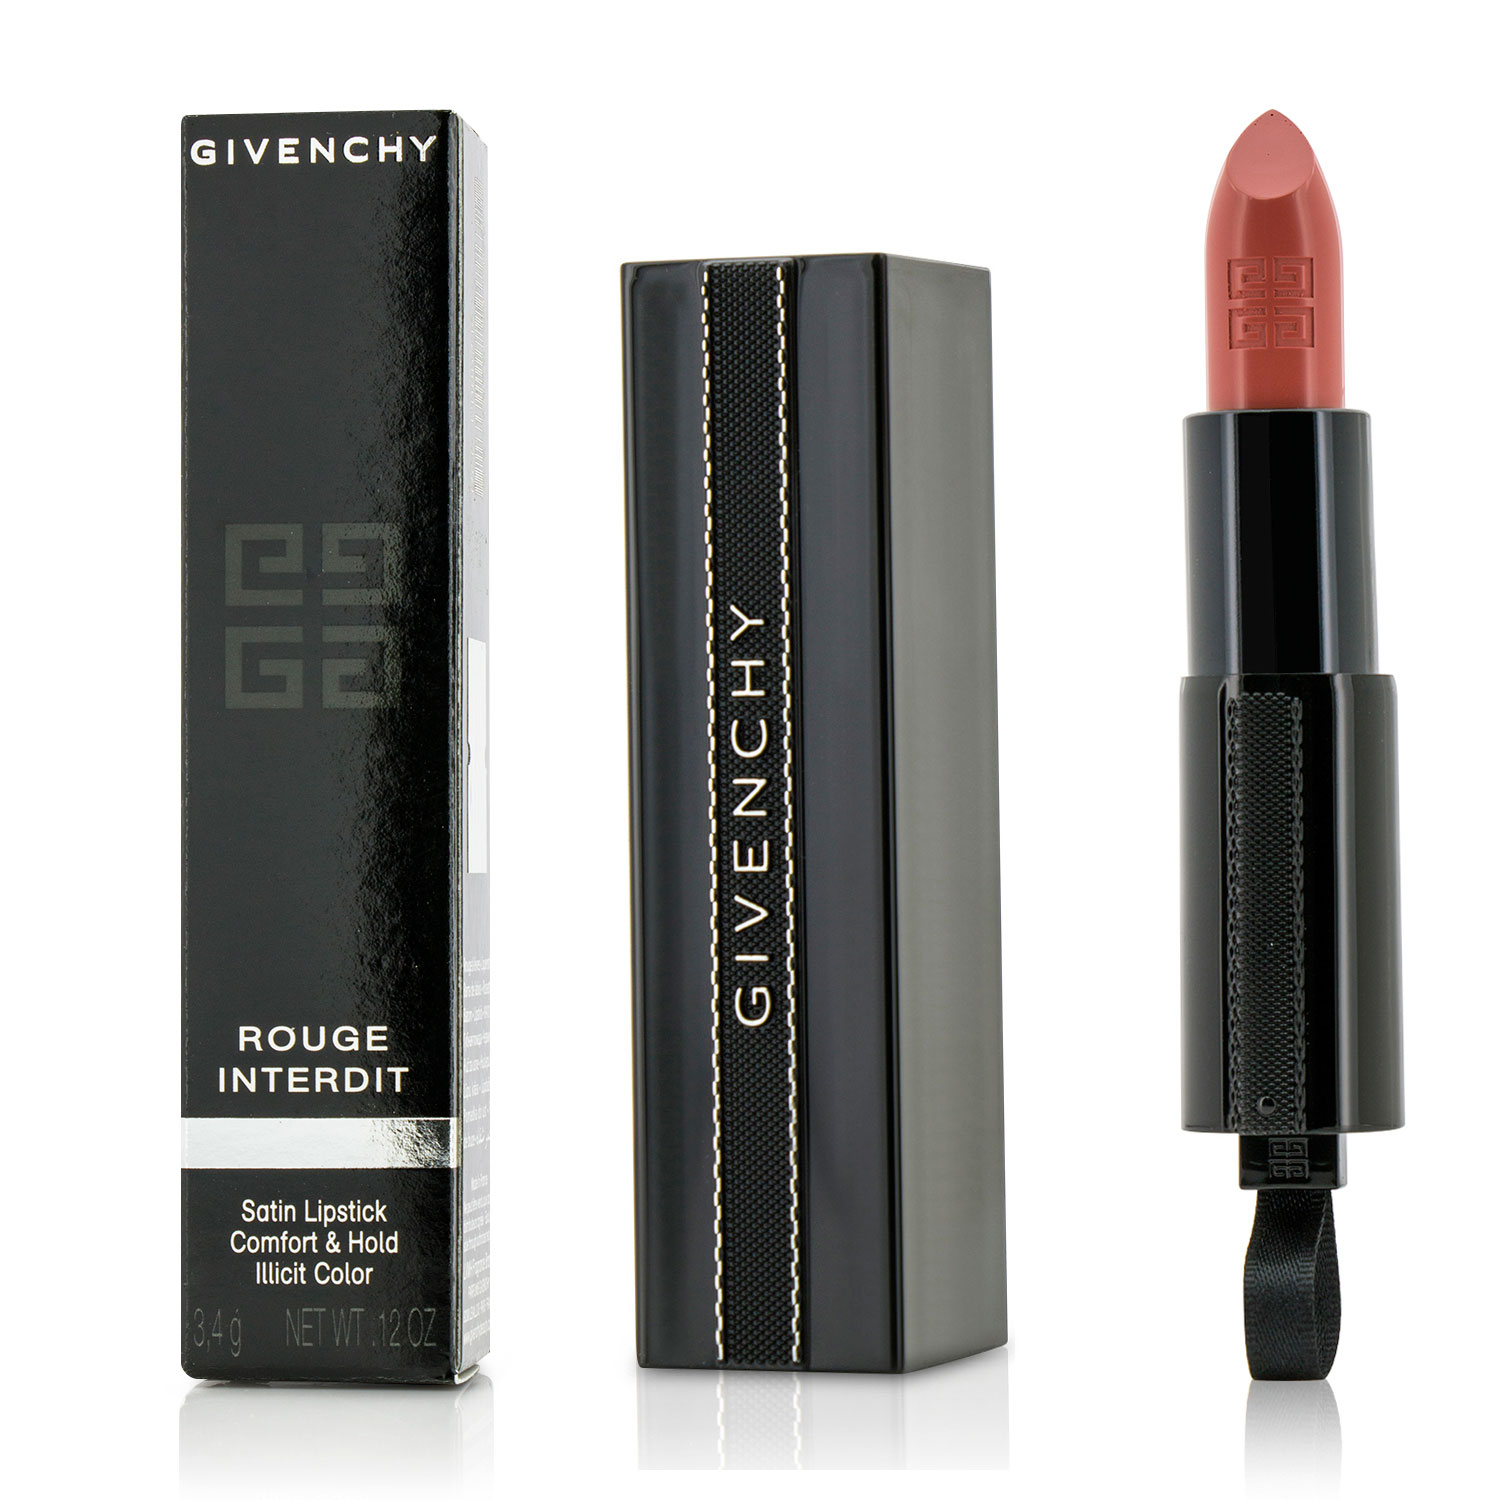 Rouge Interdit Satin Lipstick - # 18 Addicted To Rose Givenchy Image